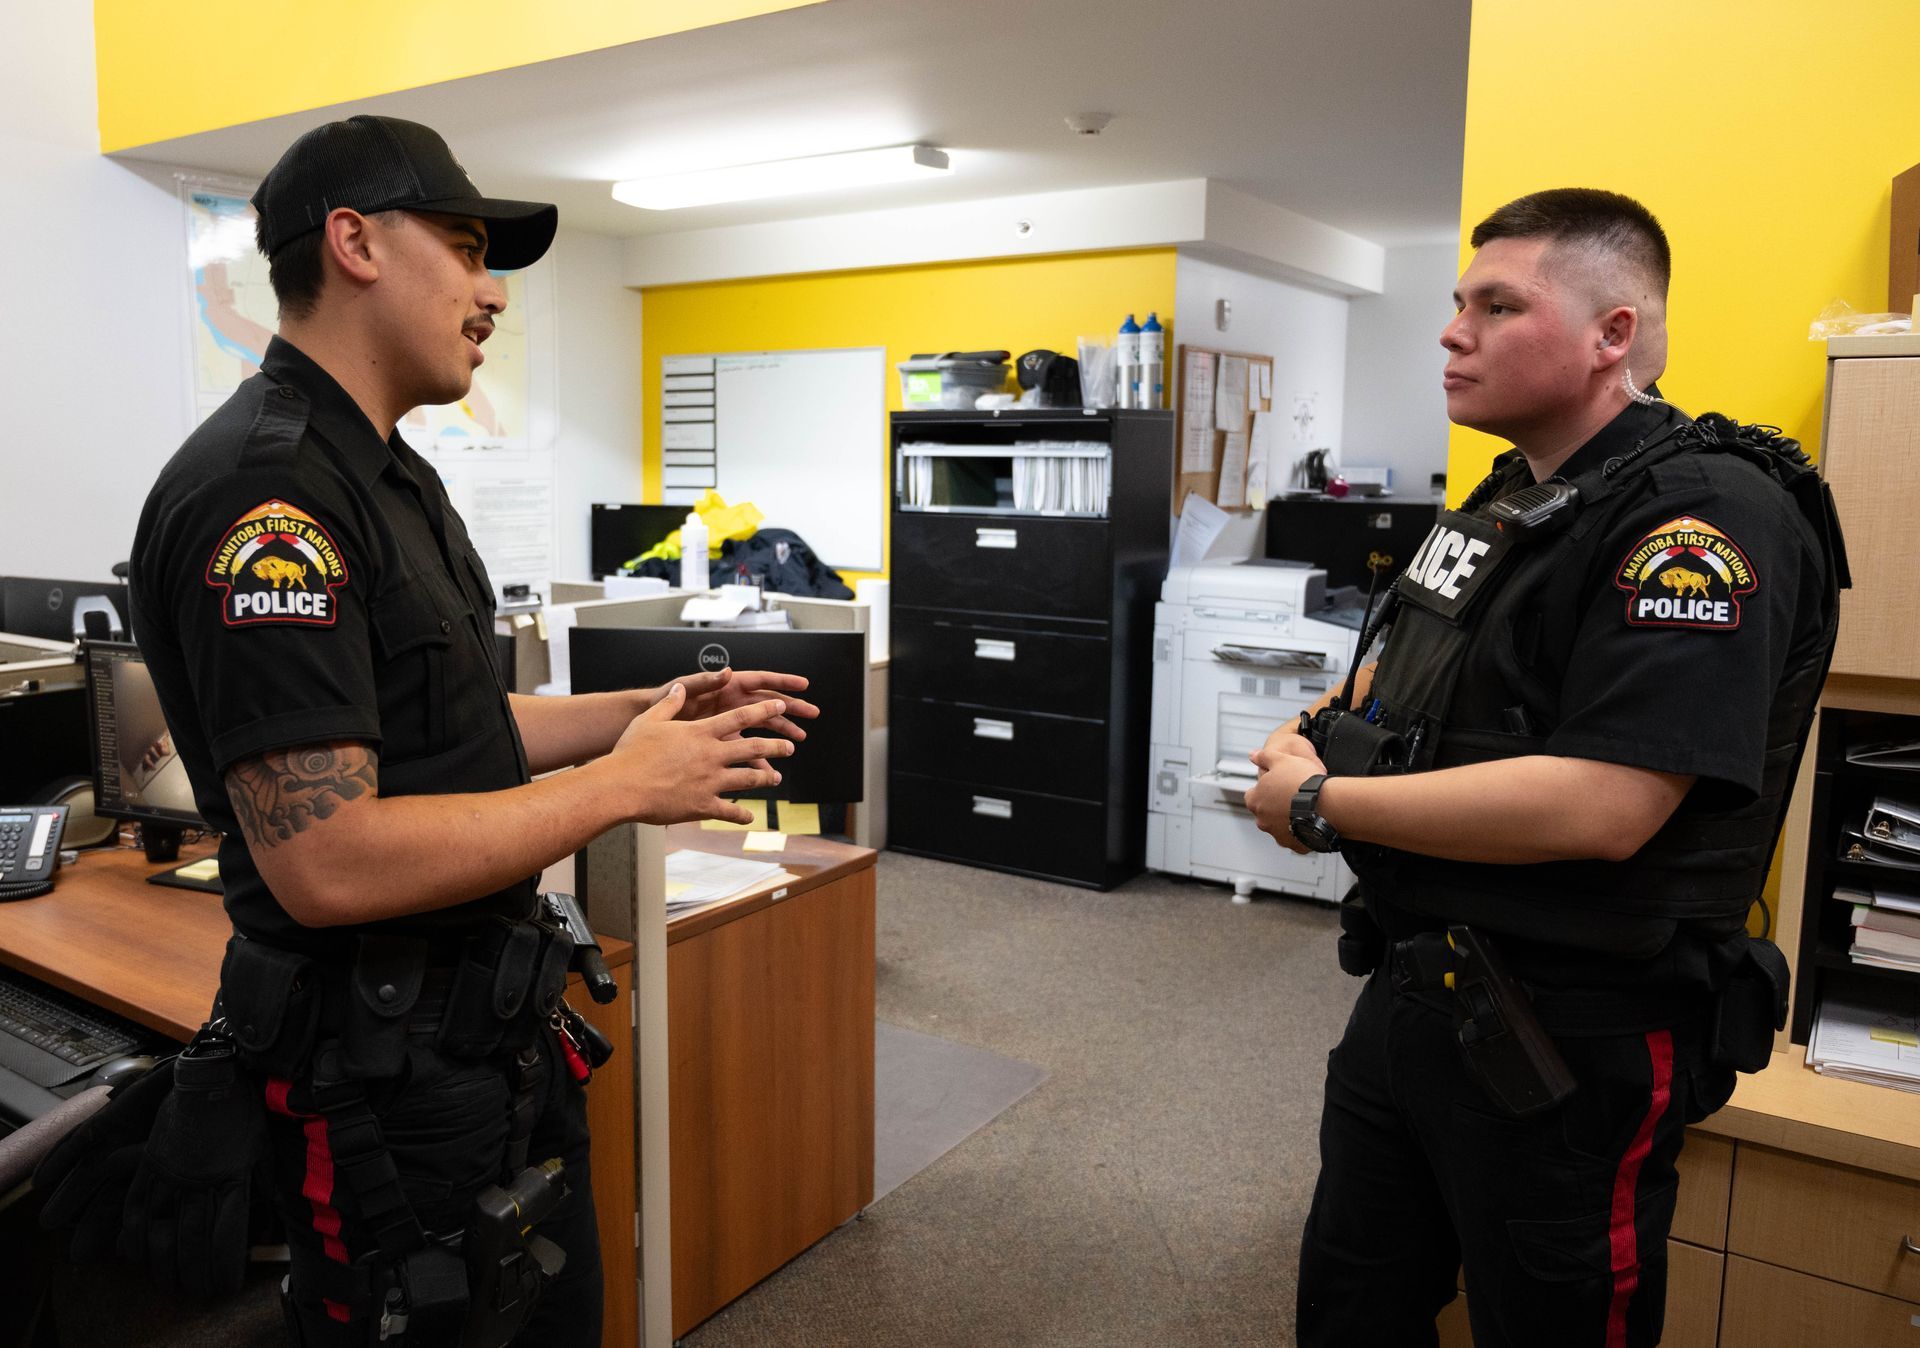 MFNPS-Manitoba First Nations Police Service - OCN detachment